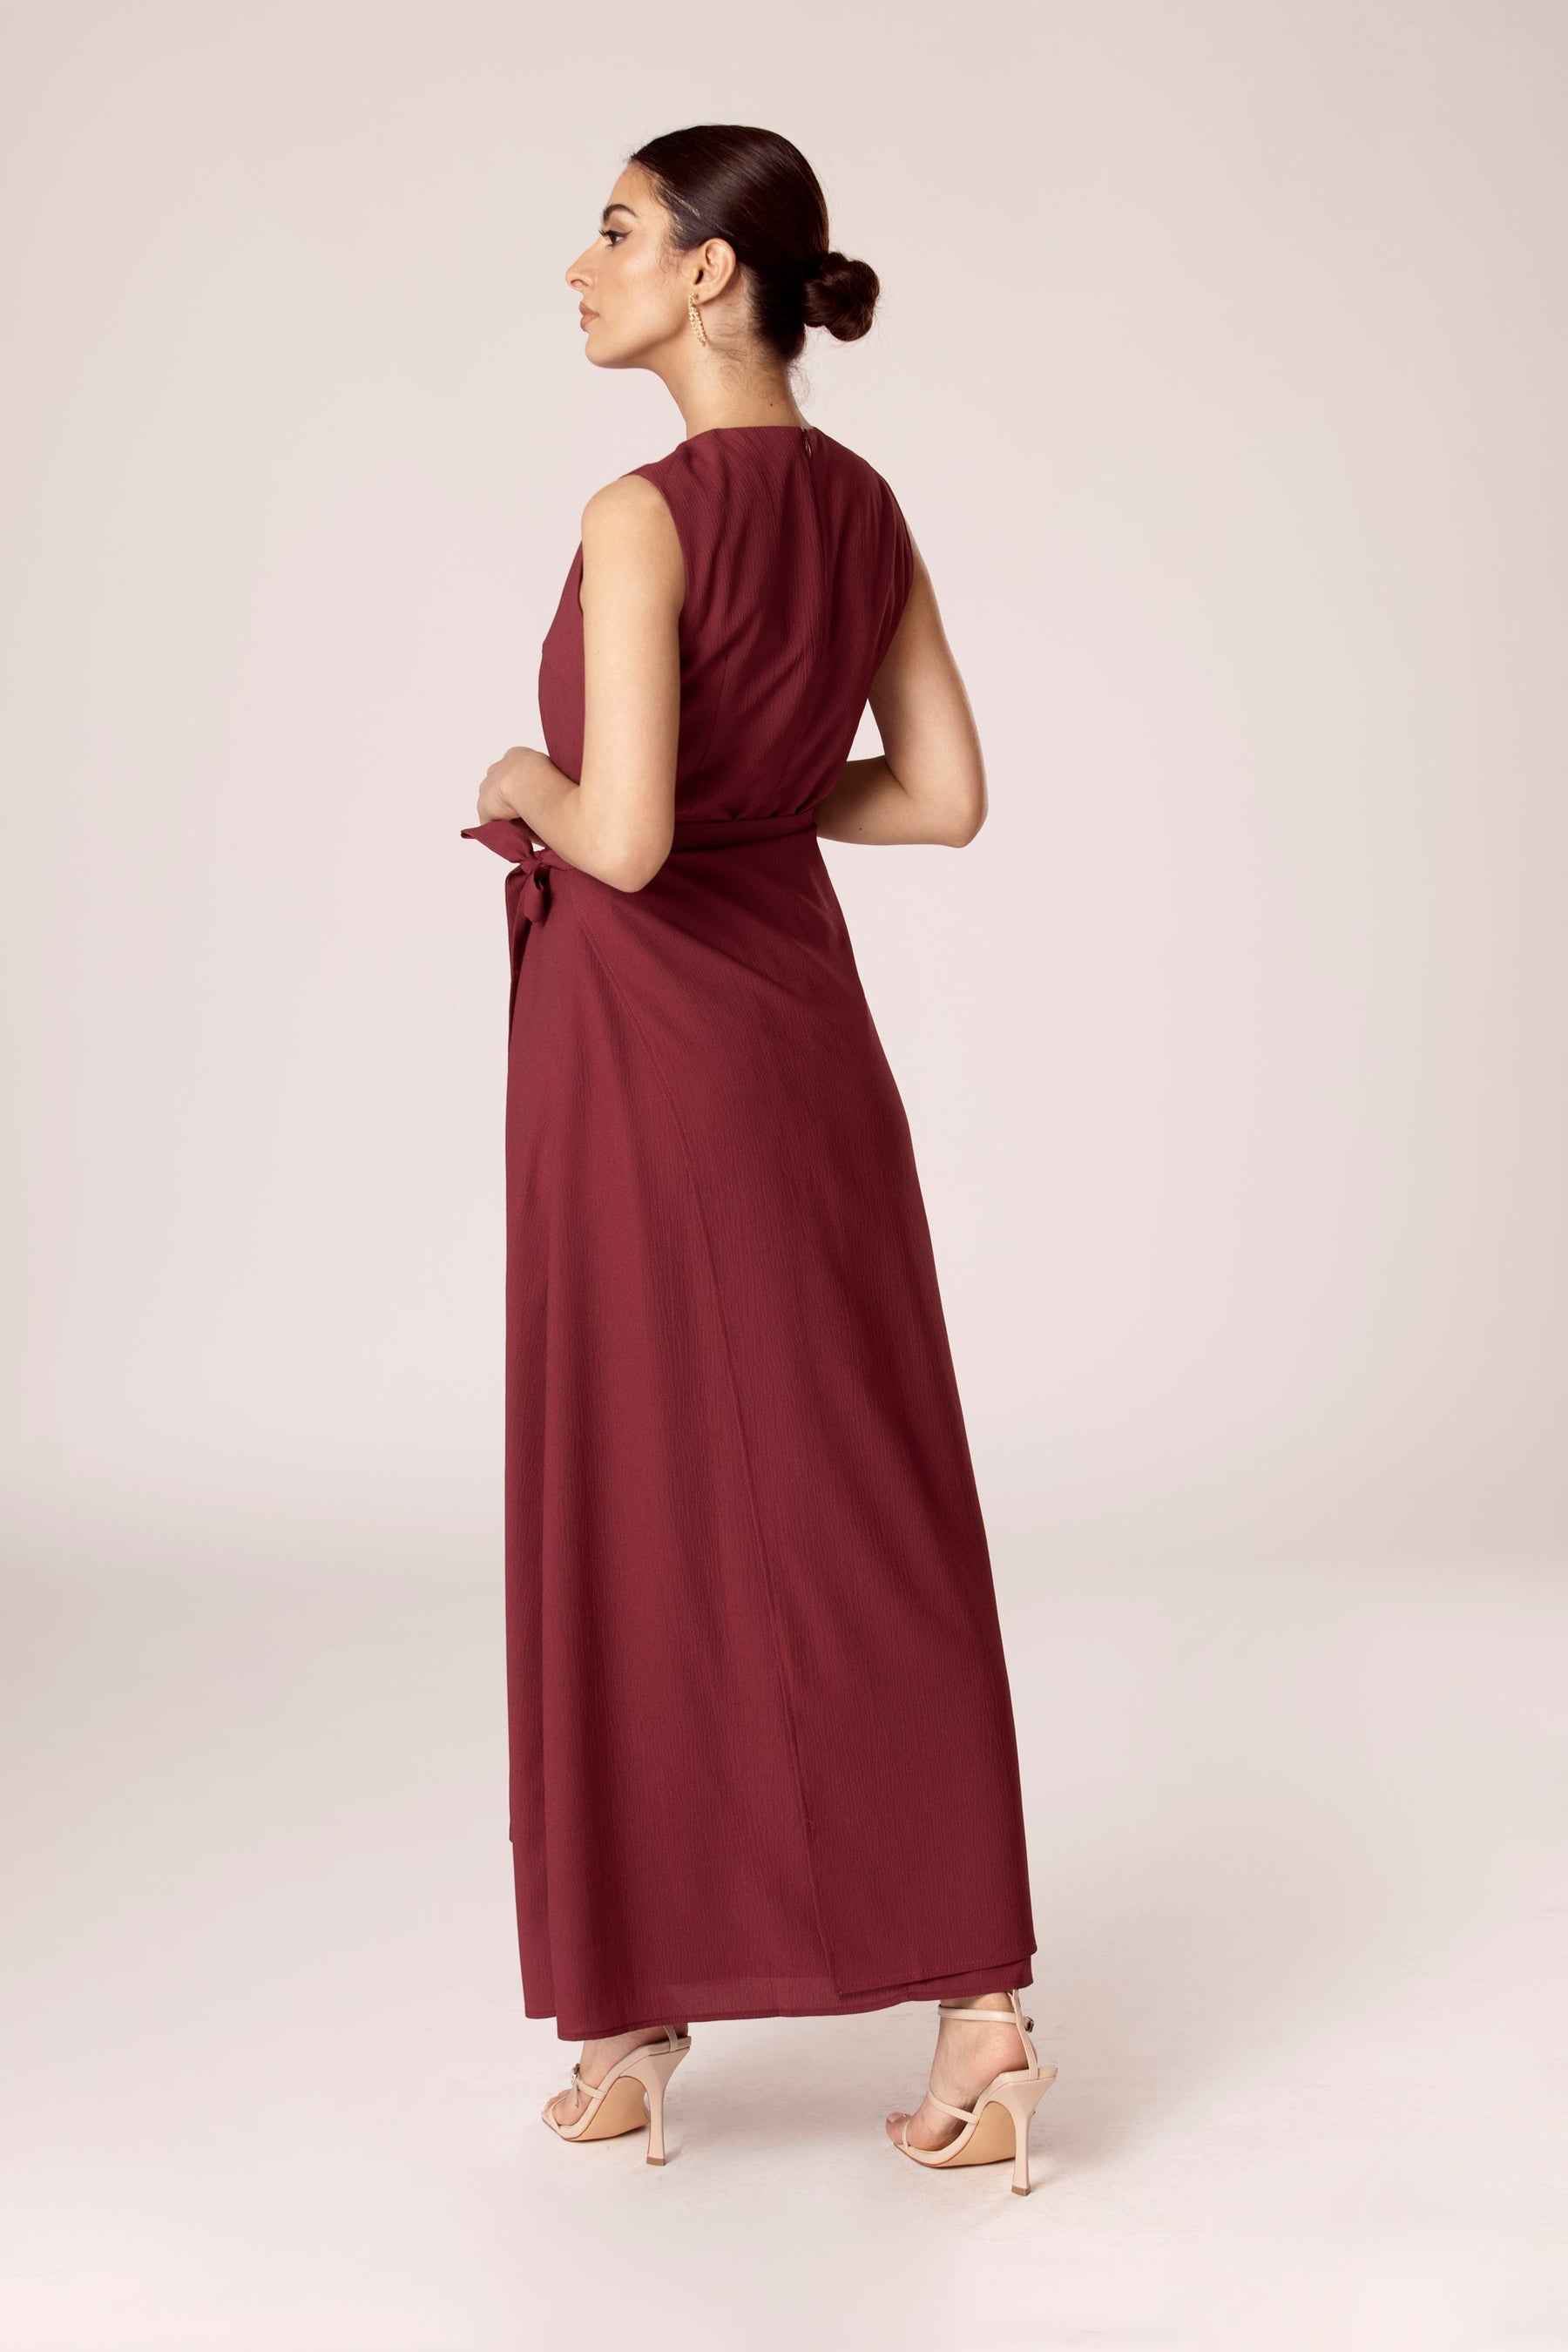 Noora Textured Three Piece Abaya Set - Ruby Red Veiled Collection 